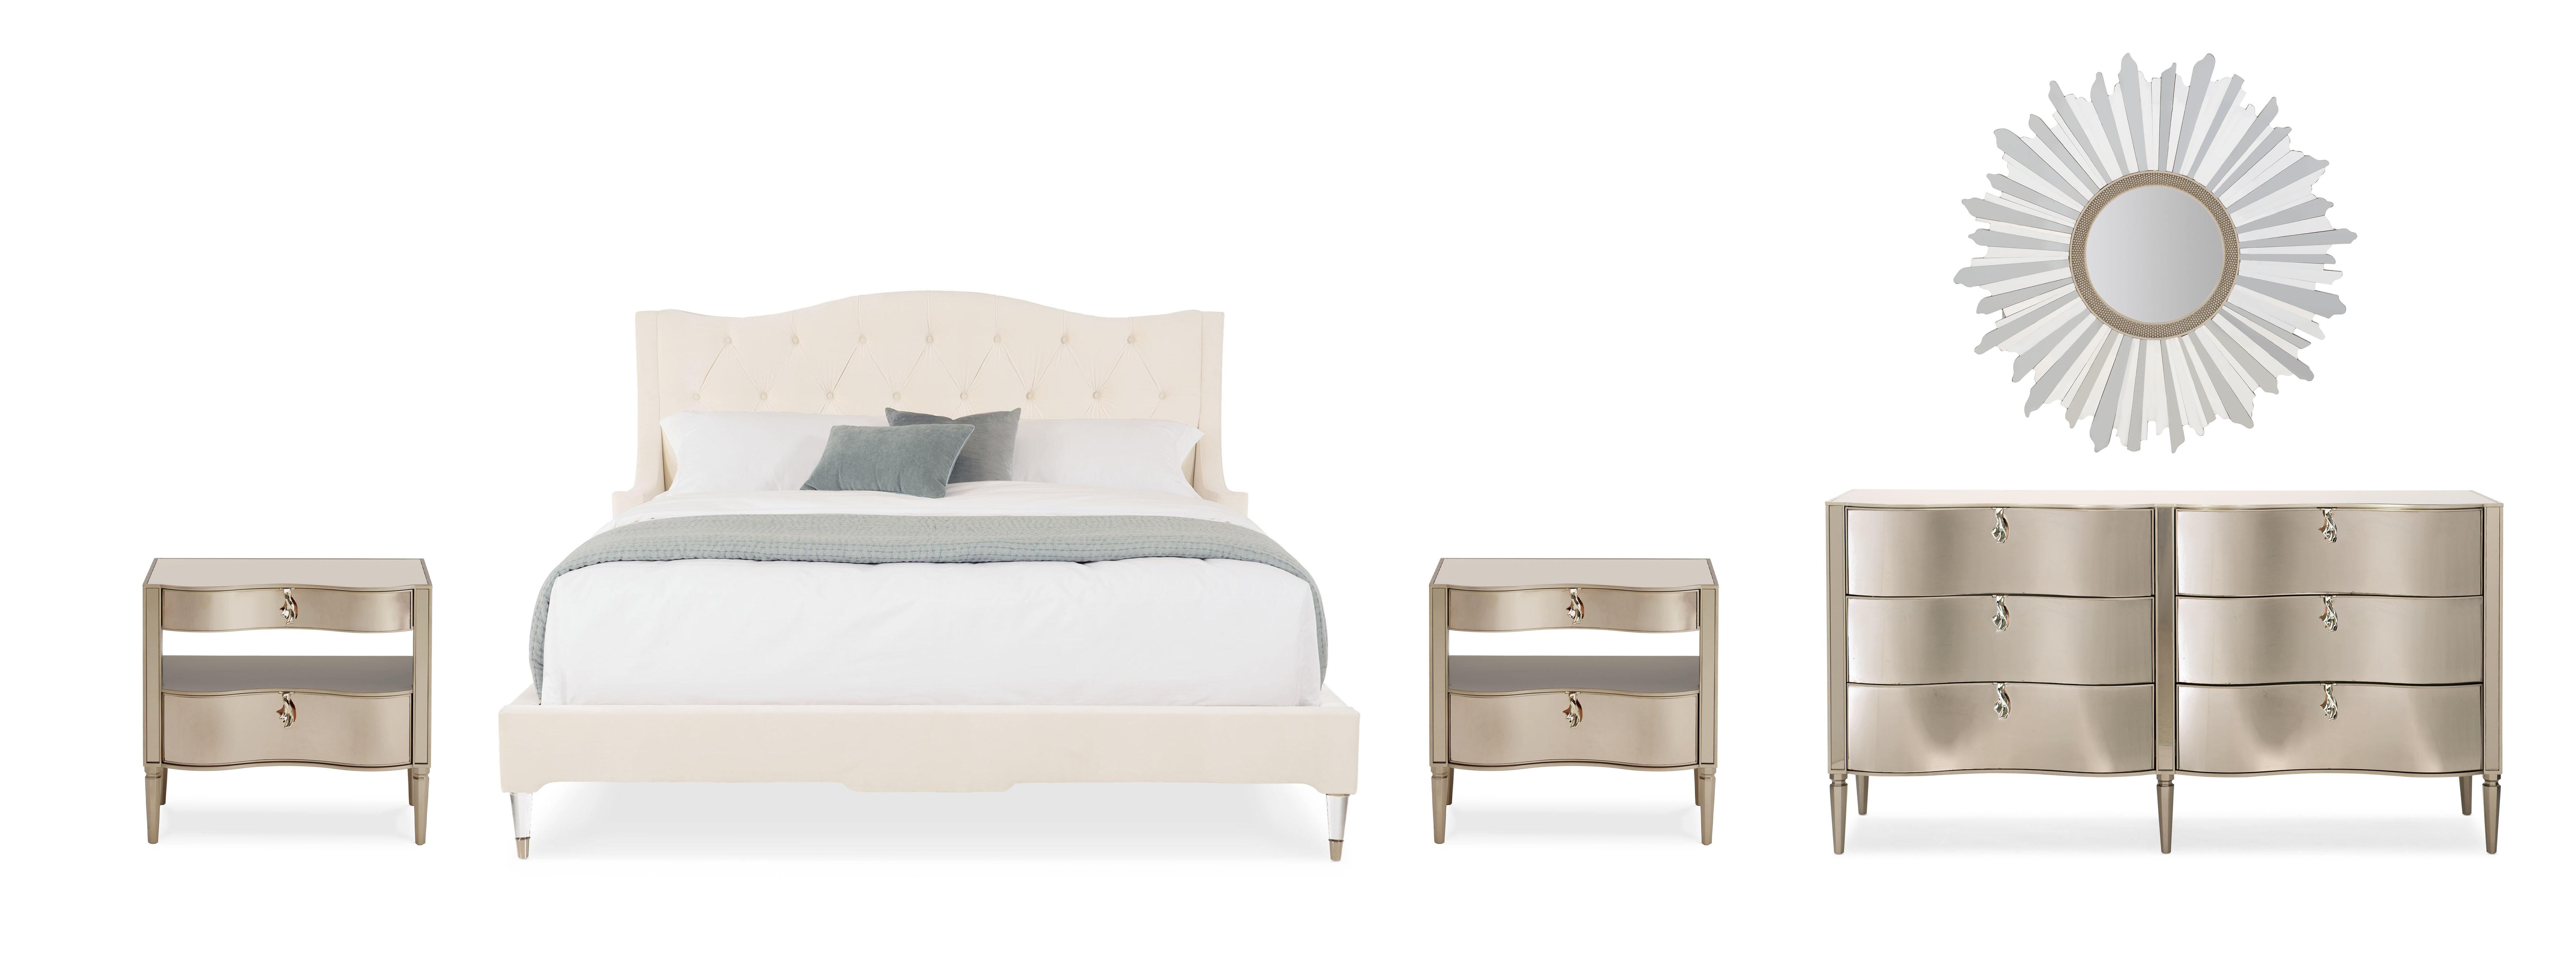 Classic Platform Bedroom Set MRS. SANDMAN / IT'S A SMALL WONDER CLA-419-108-Set-5 in Cream Fabric